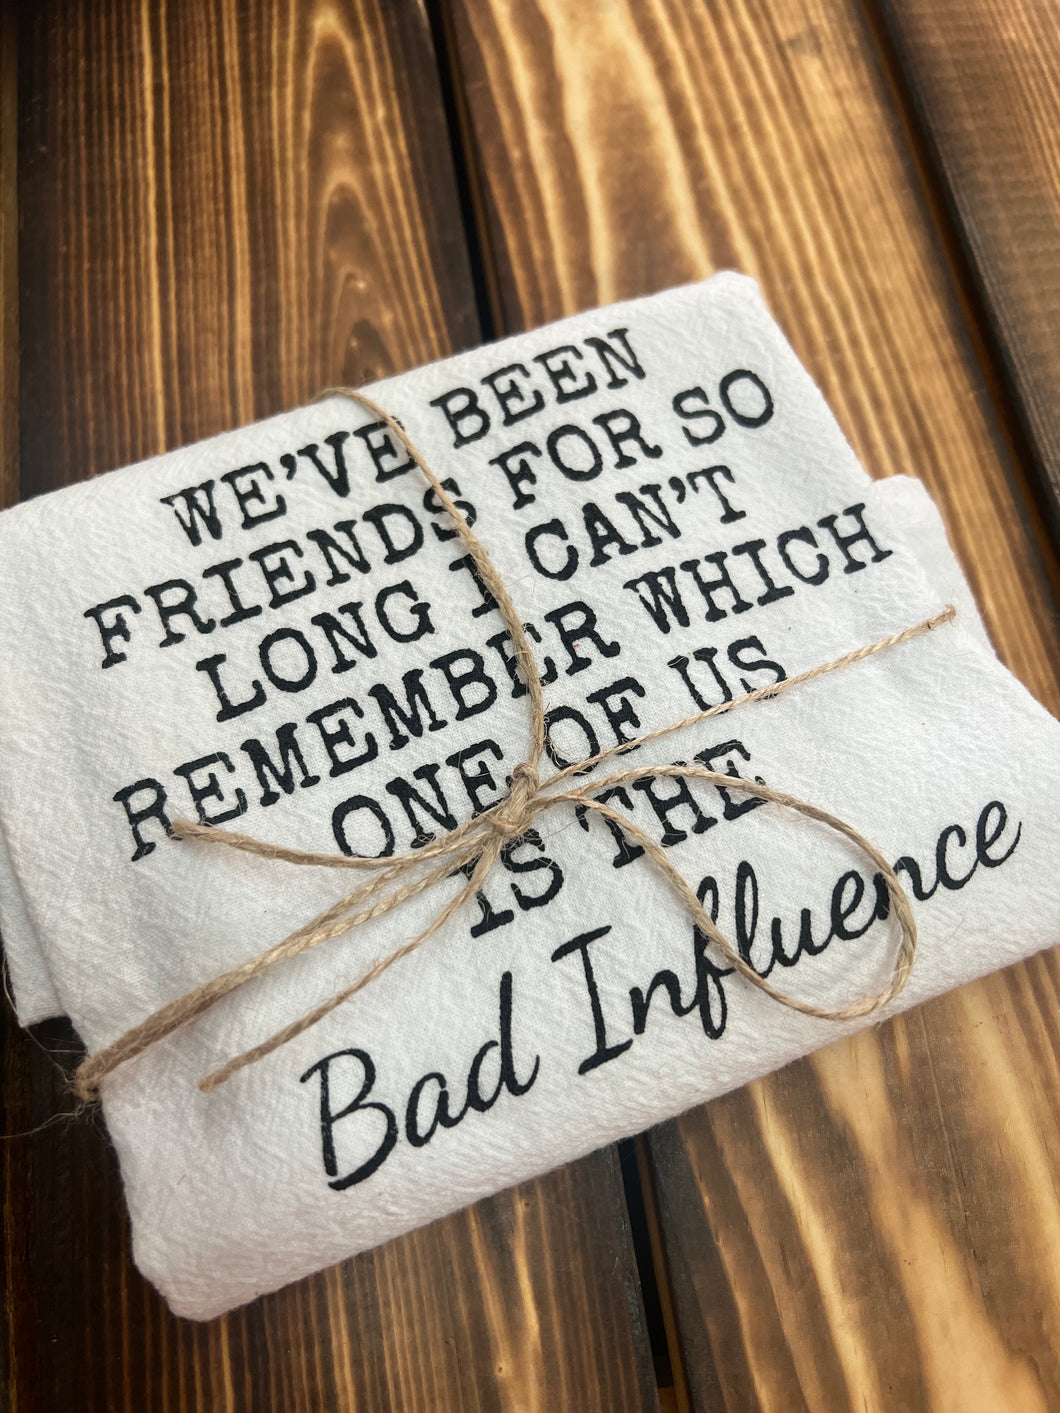 Bad Influence Tea Towel